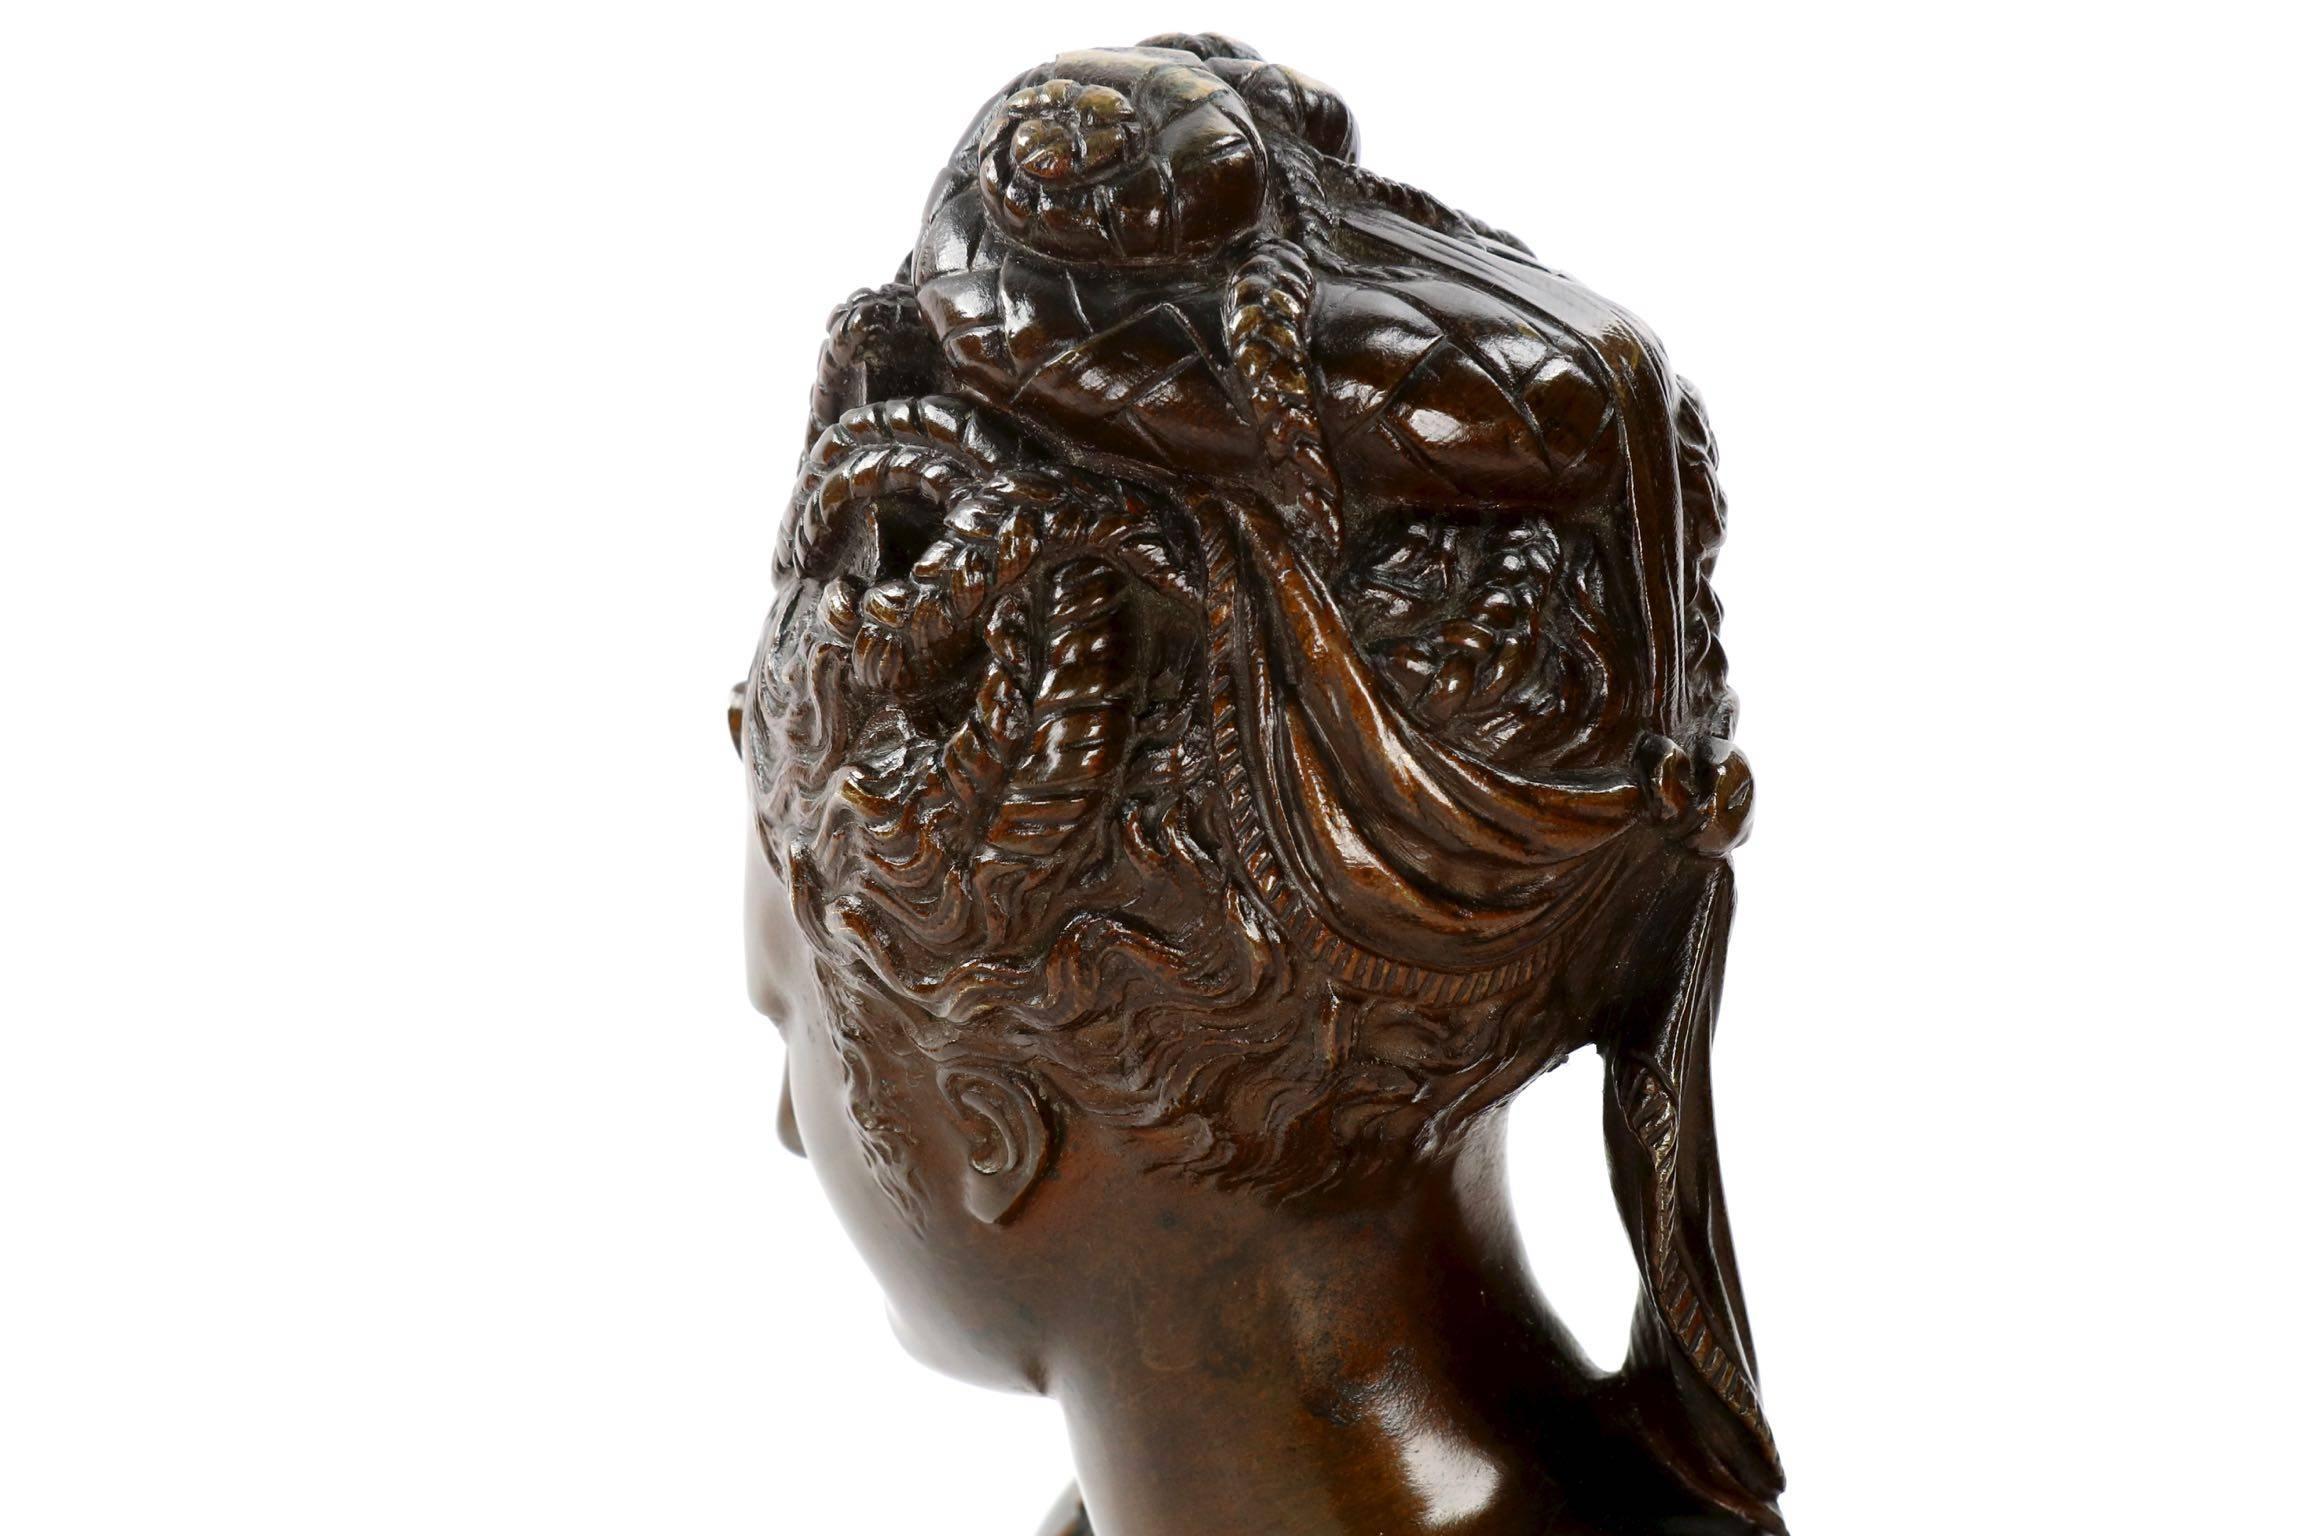 19th Century French Bronze Sculpture 